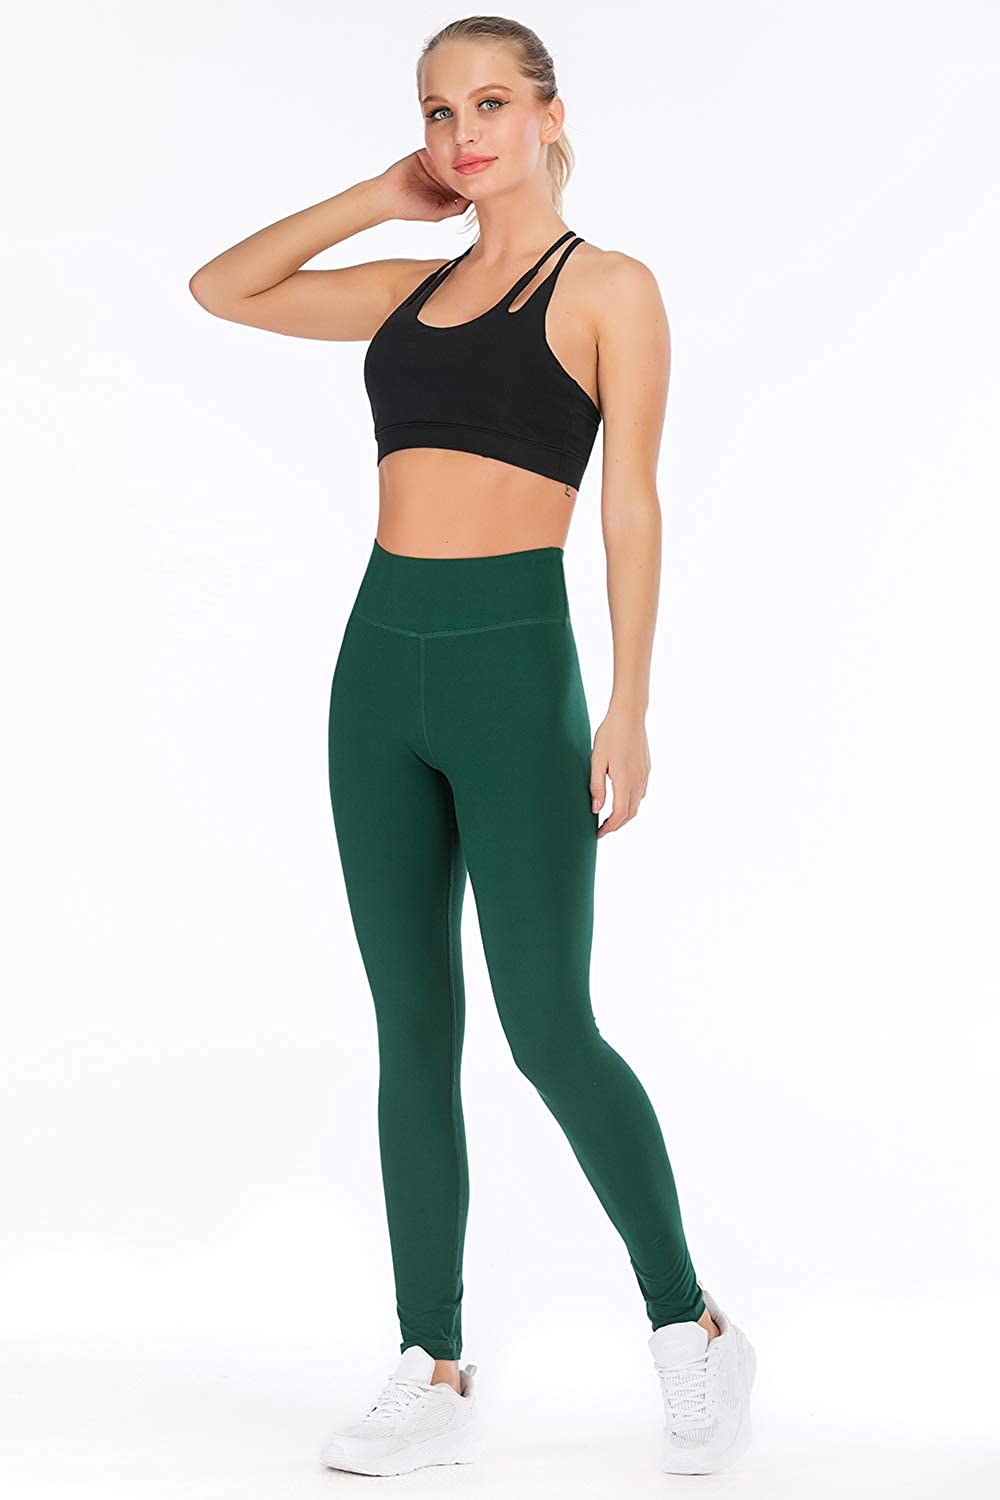 dark green yoga pants